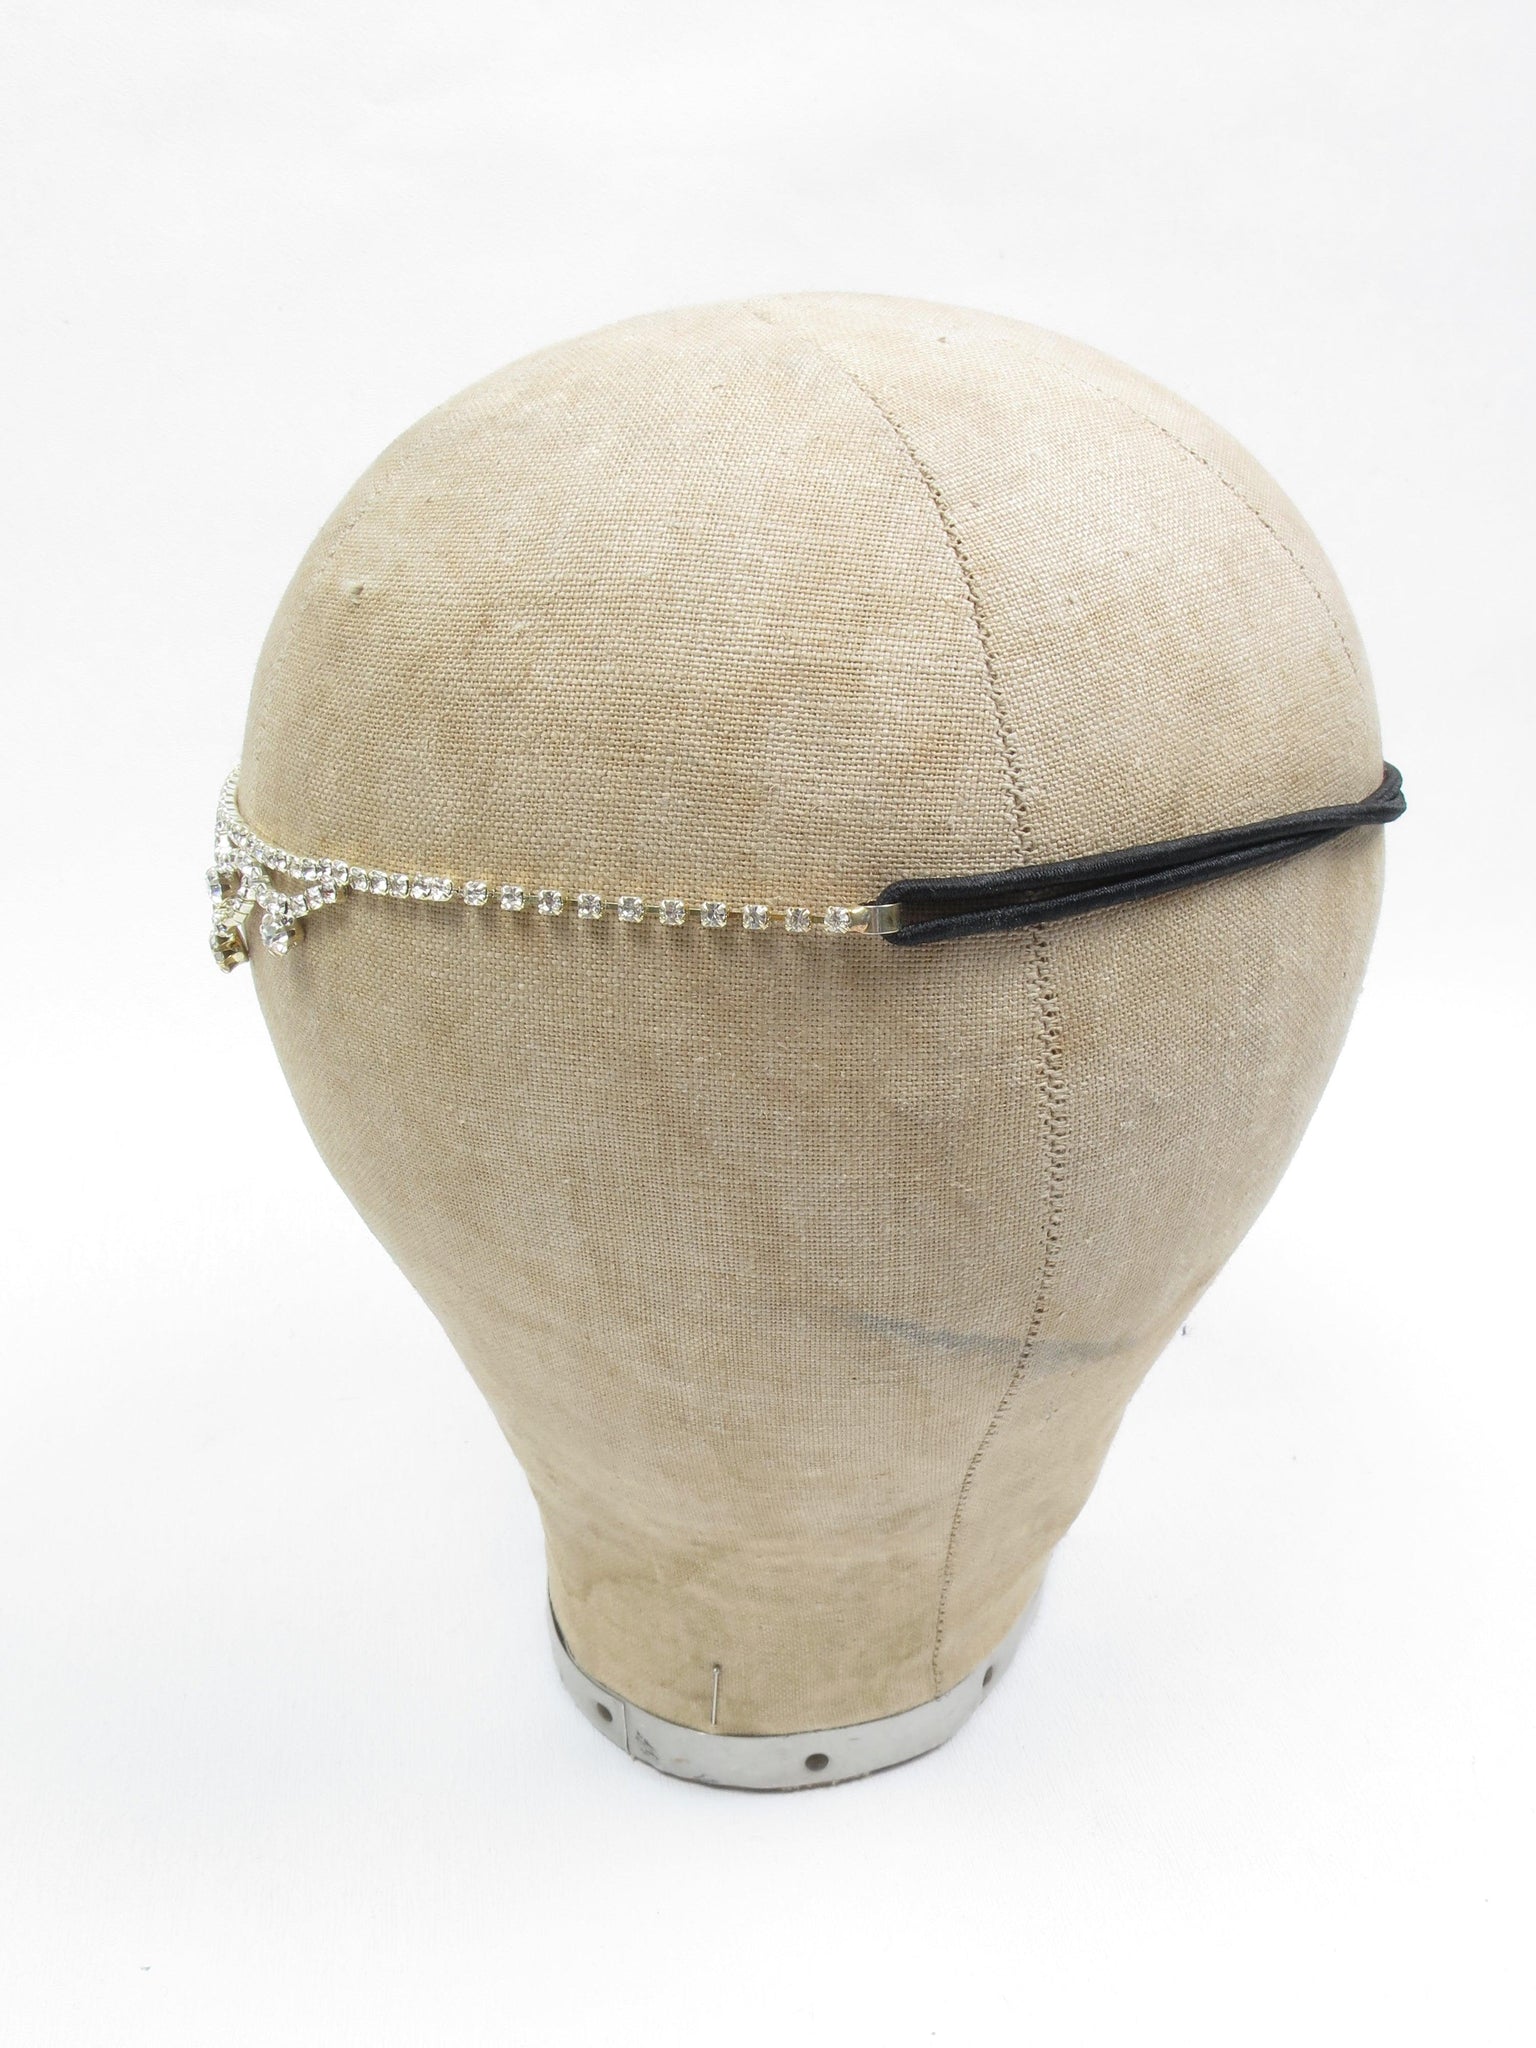 1920s Style Diamanté Headpiece - The Harlequin